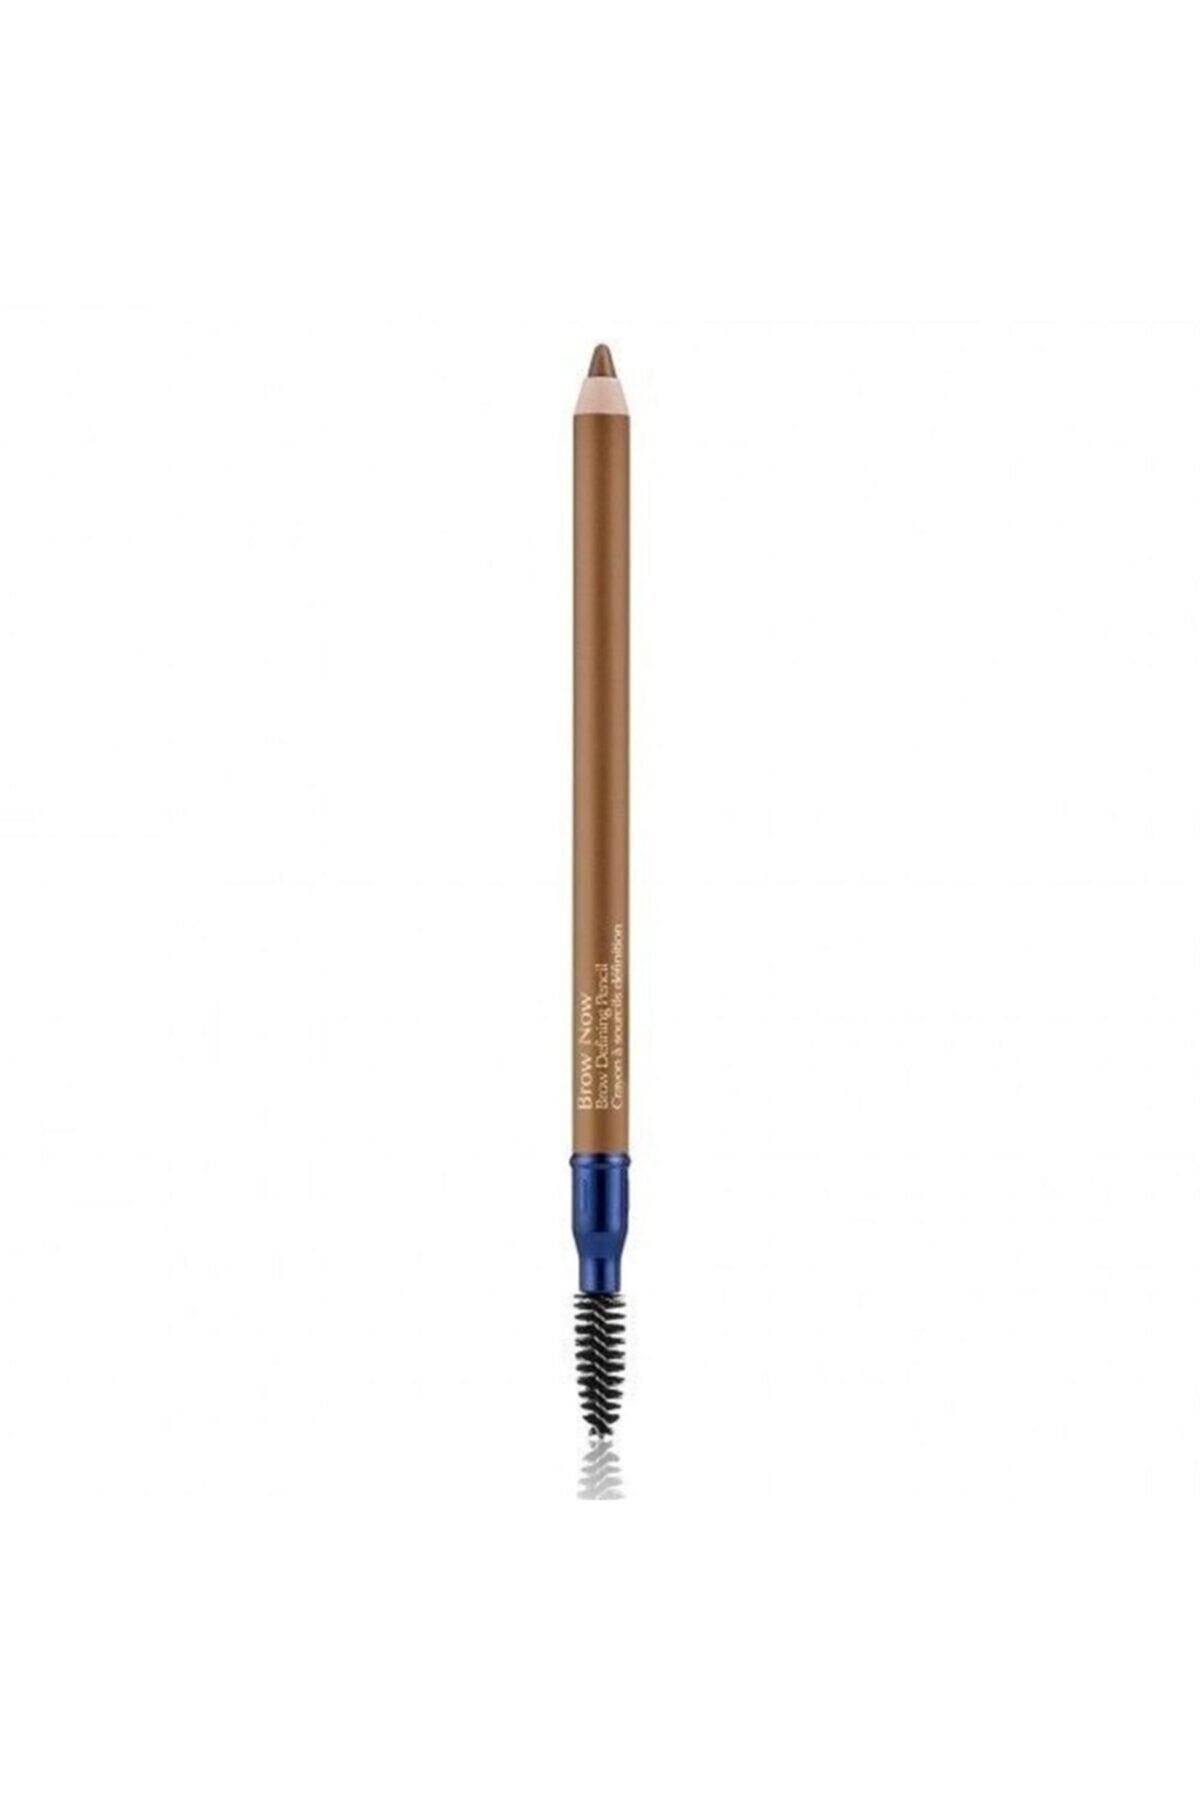 Estee Lauder Çift Taraflı Kaş Kalemi - Brow Now Brow Defining Pencil - Light Brunette - 1.2 g 887167189959 R8P9